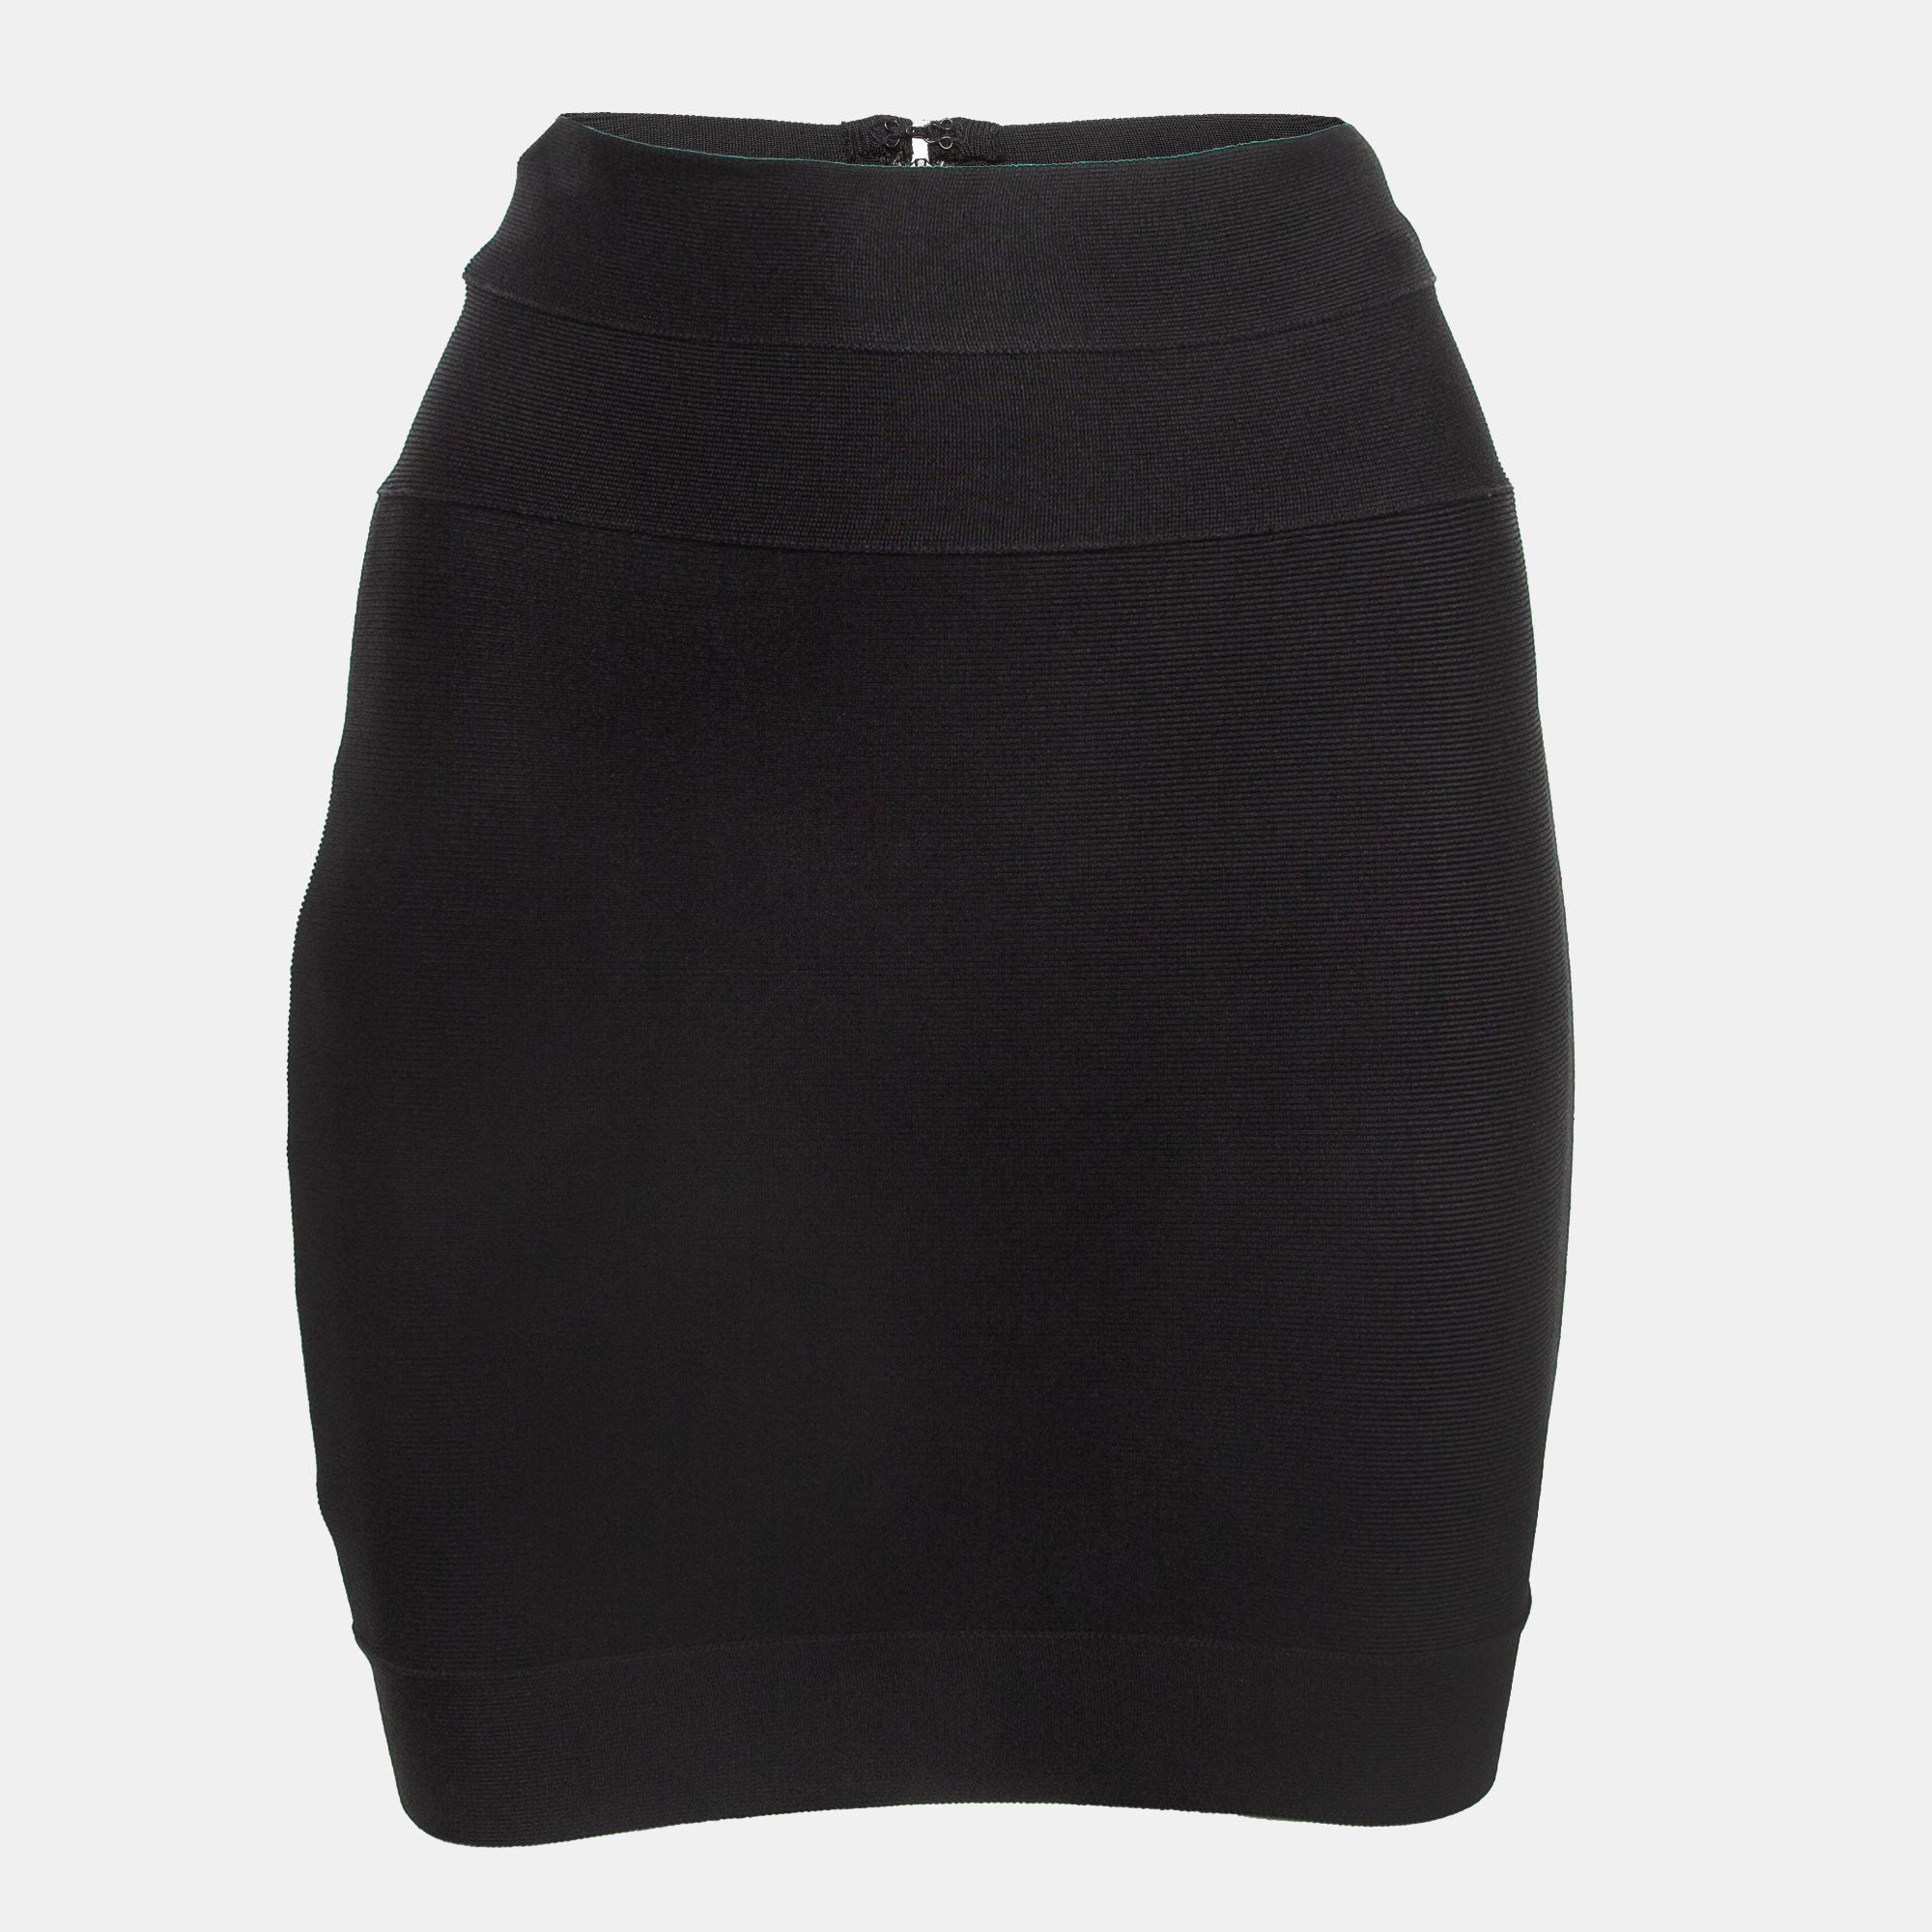 Moschino couture herve leger black bandage knit mini skirt xs